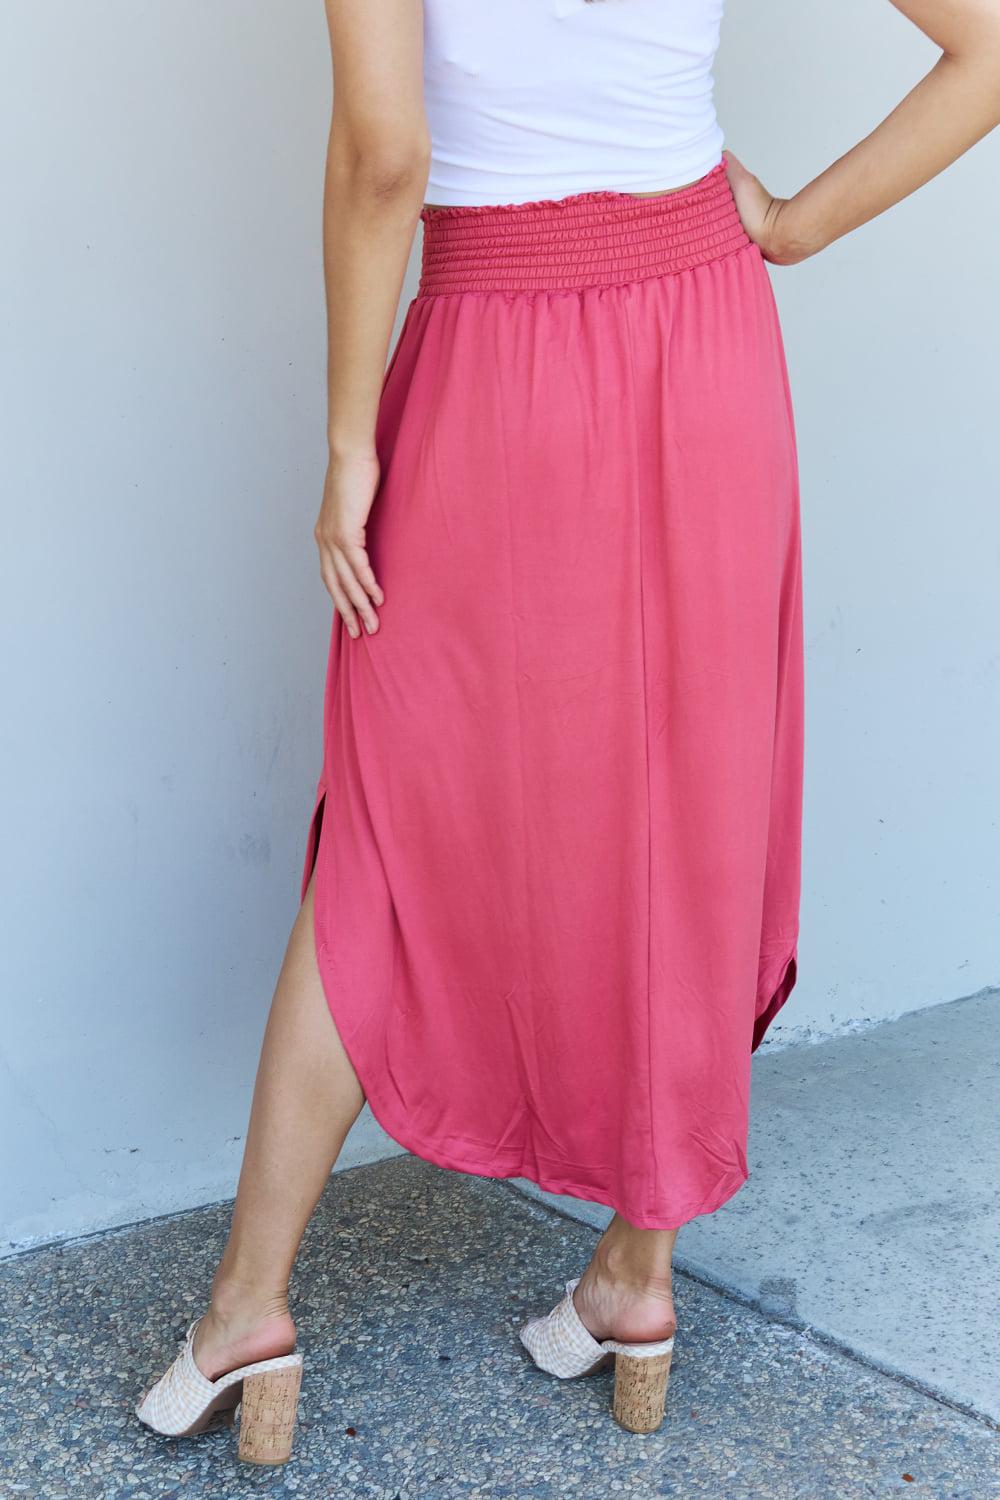 Doublju Comfort Princess Full Size High Waist Scoop Hem Maxi Skirt in Hot Pink BLUE ZONE PLANET